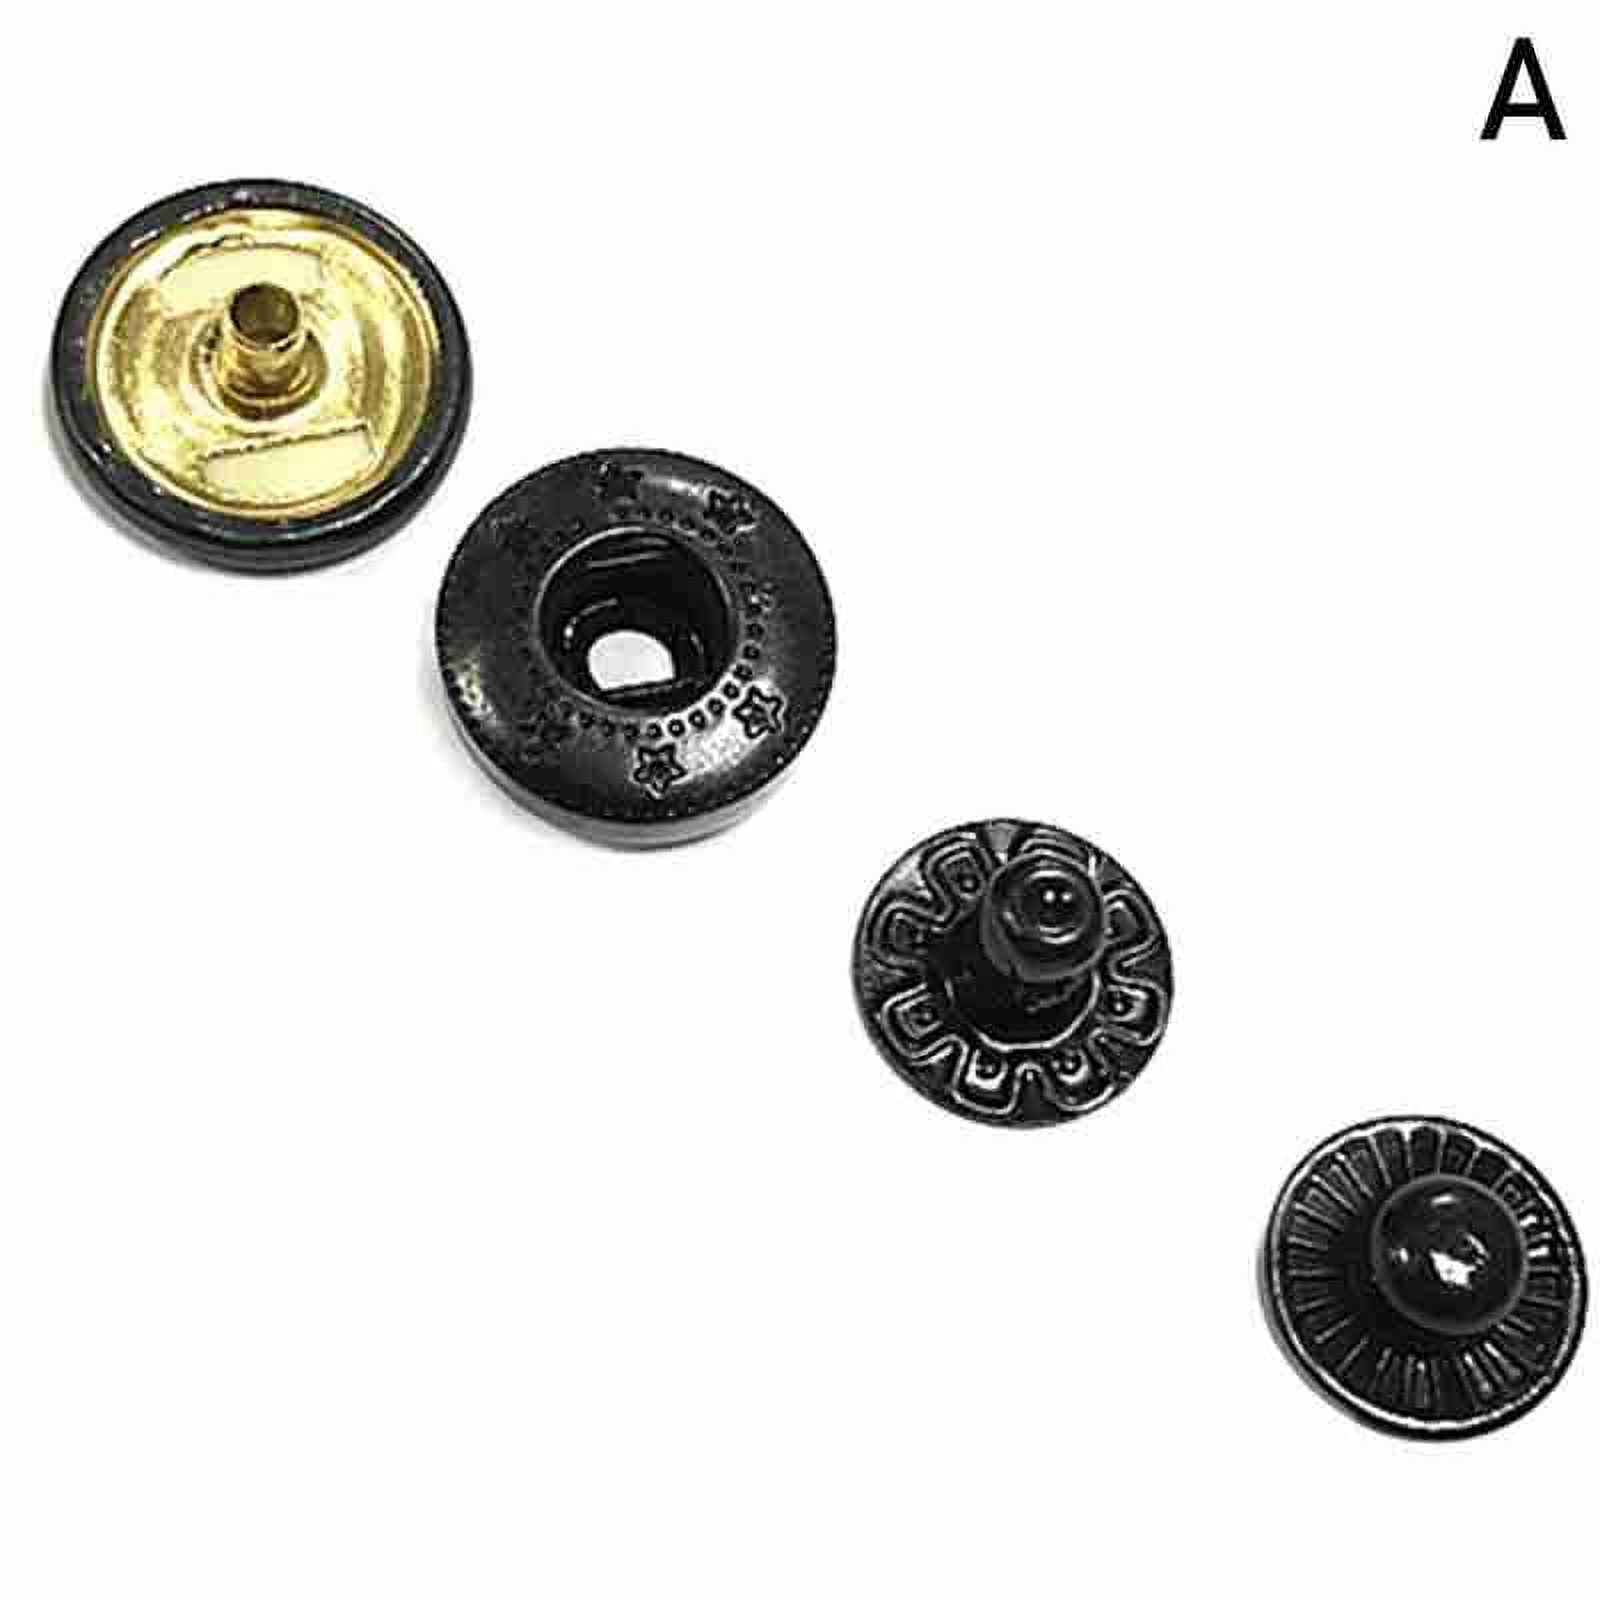 10pcs Retro Metal Buttons Detachable Snap Fastener Pants Pin For Je